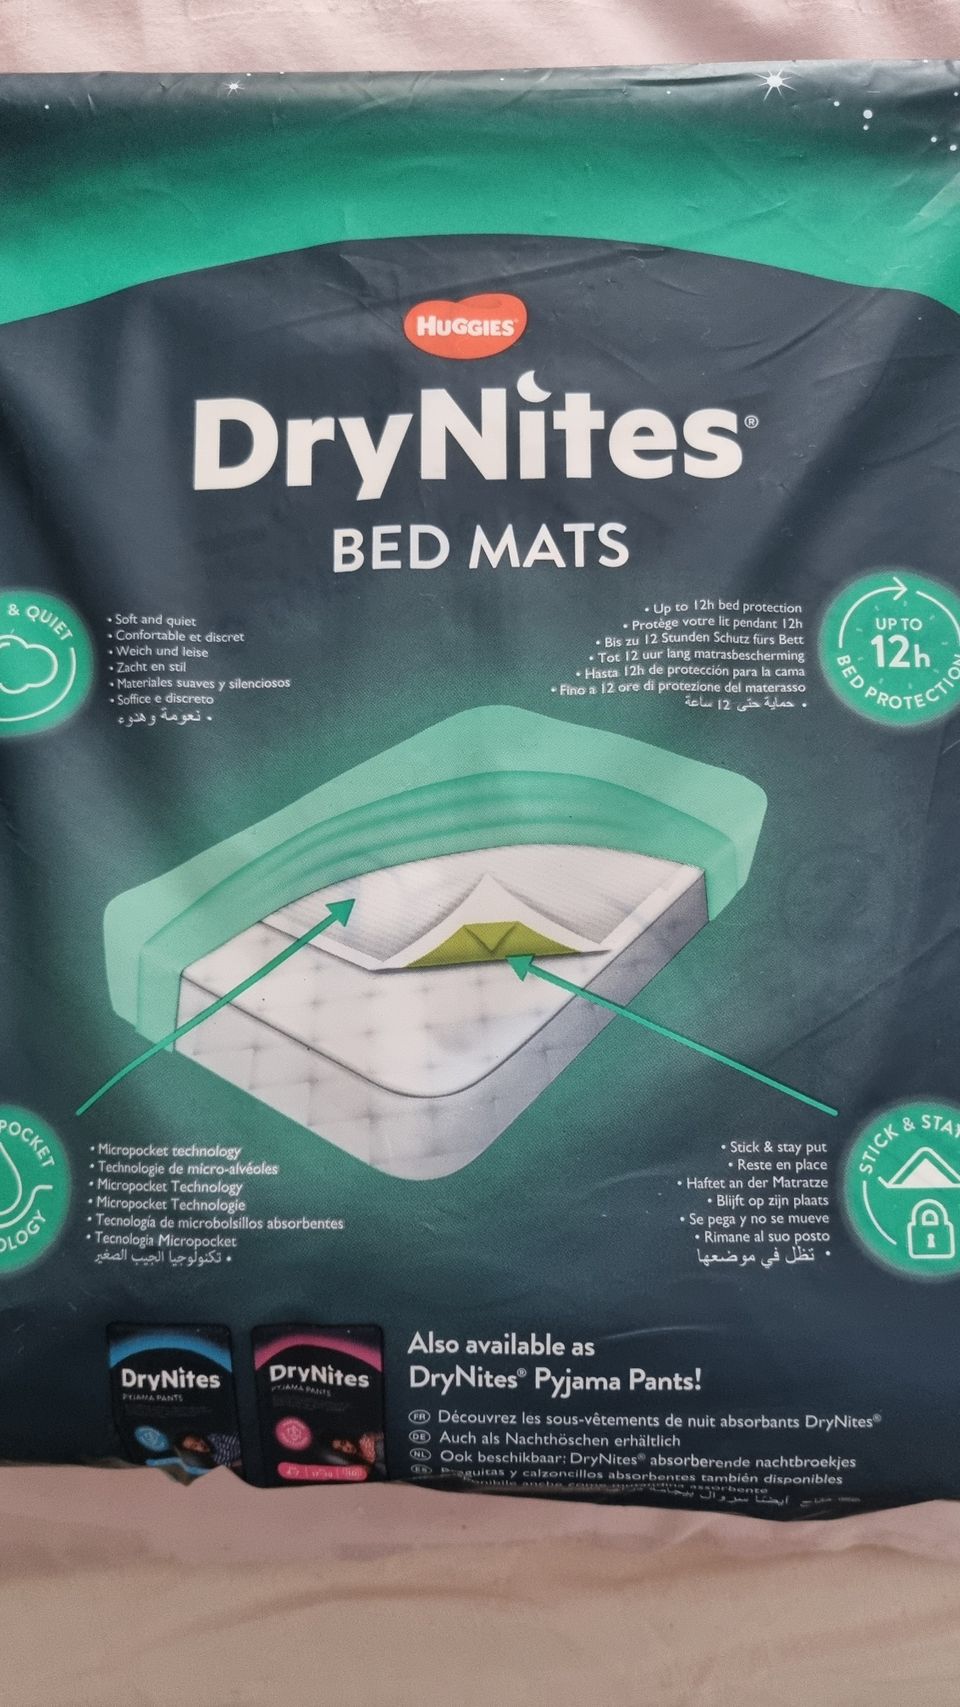 DryNites Bed mats